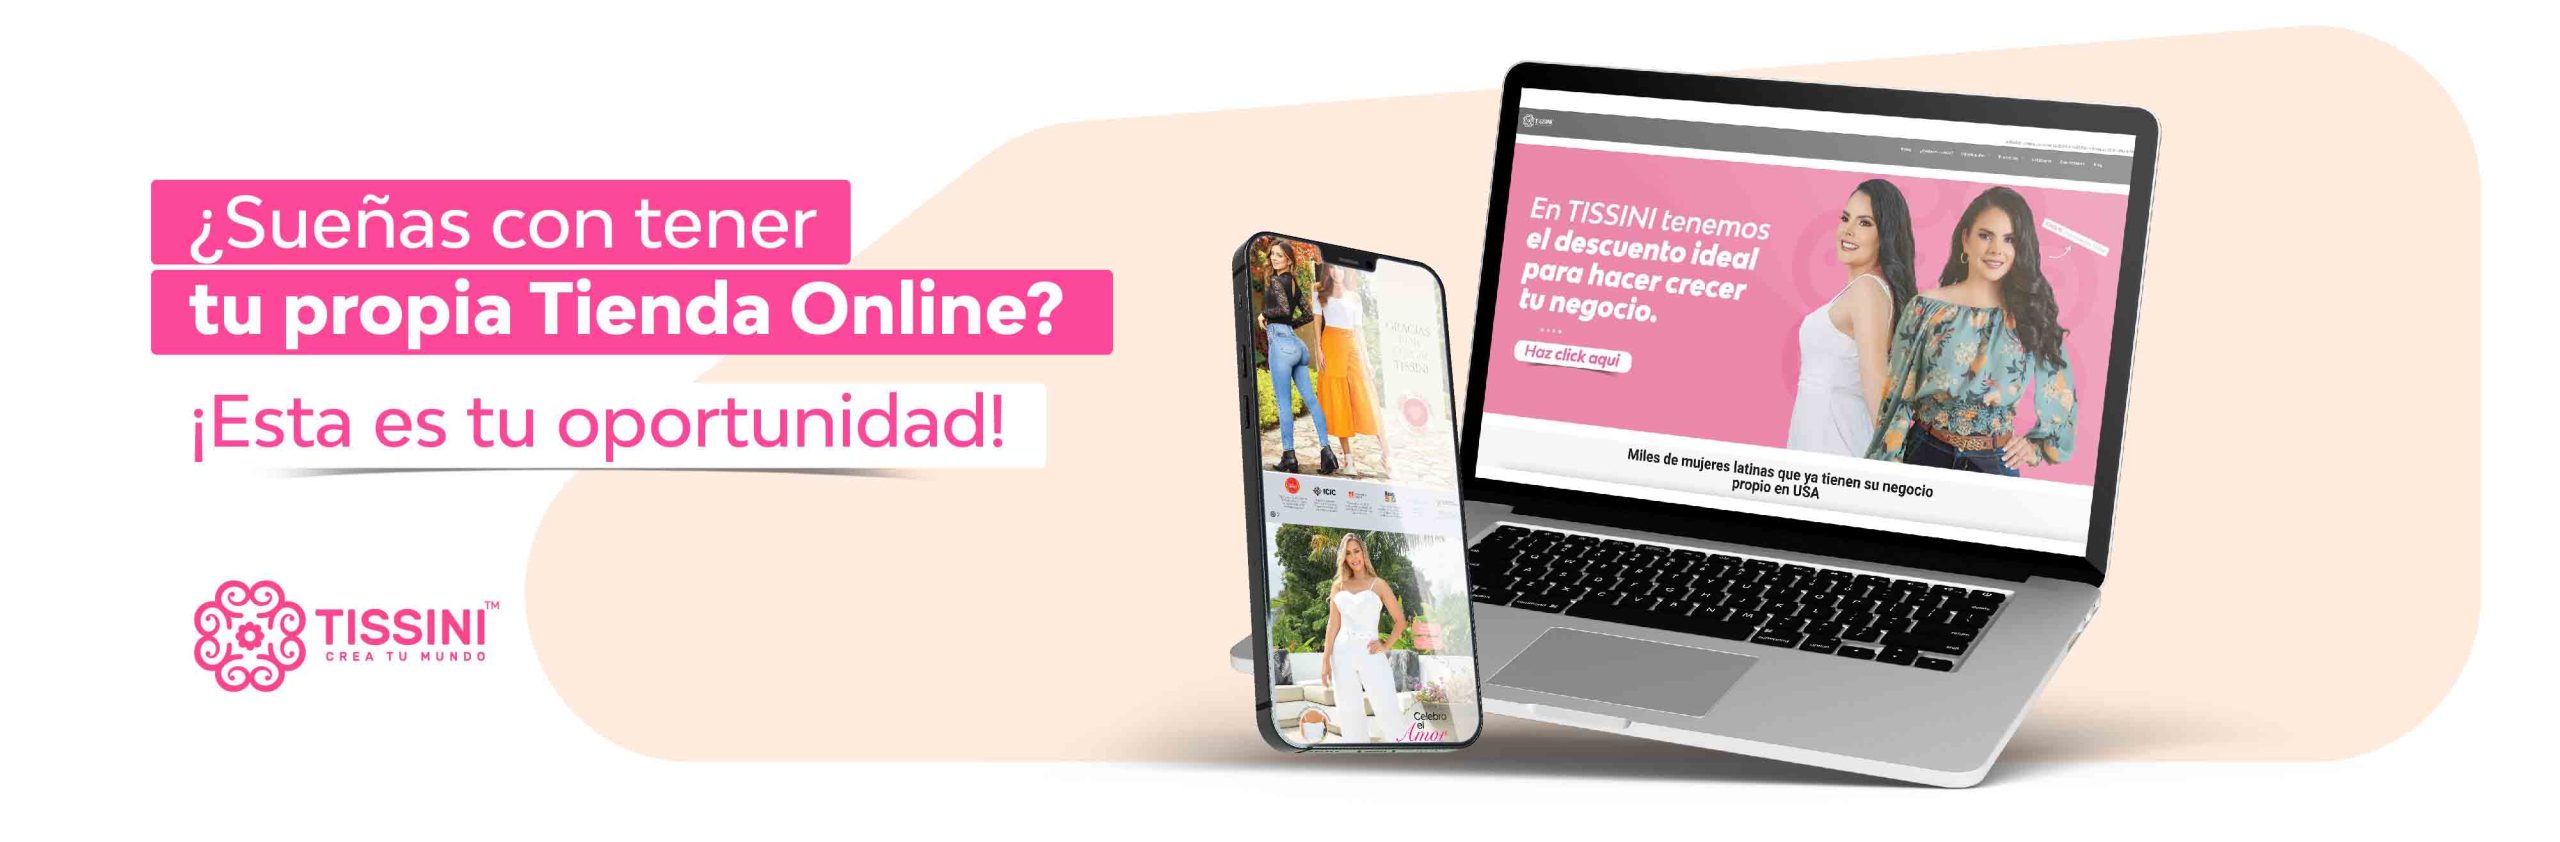 Tienda Online - Negocio digital TISSINI